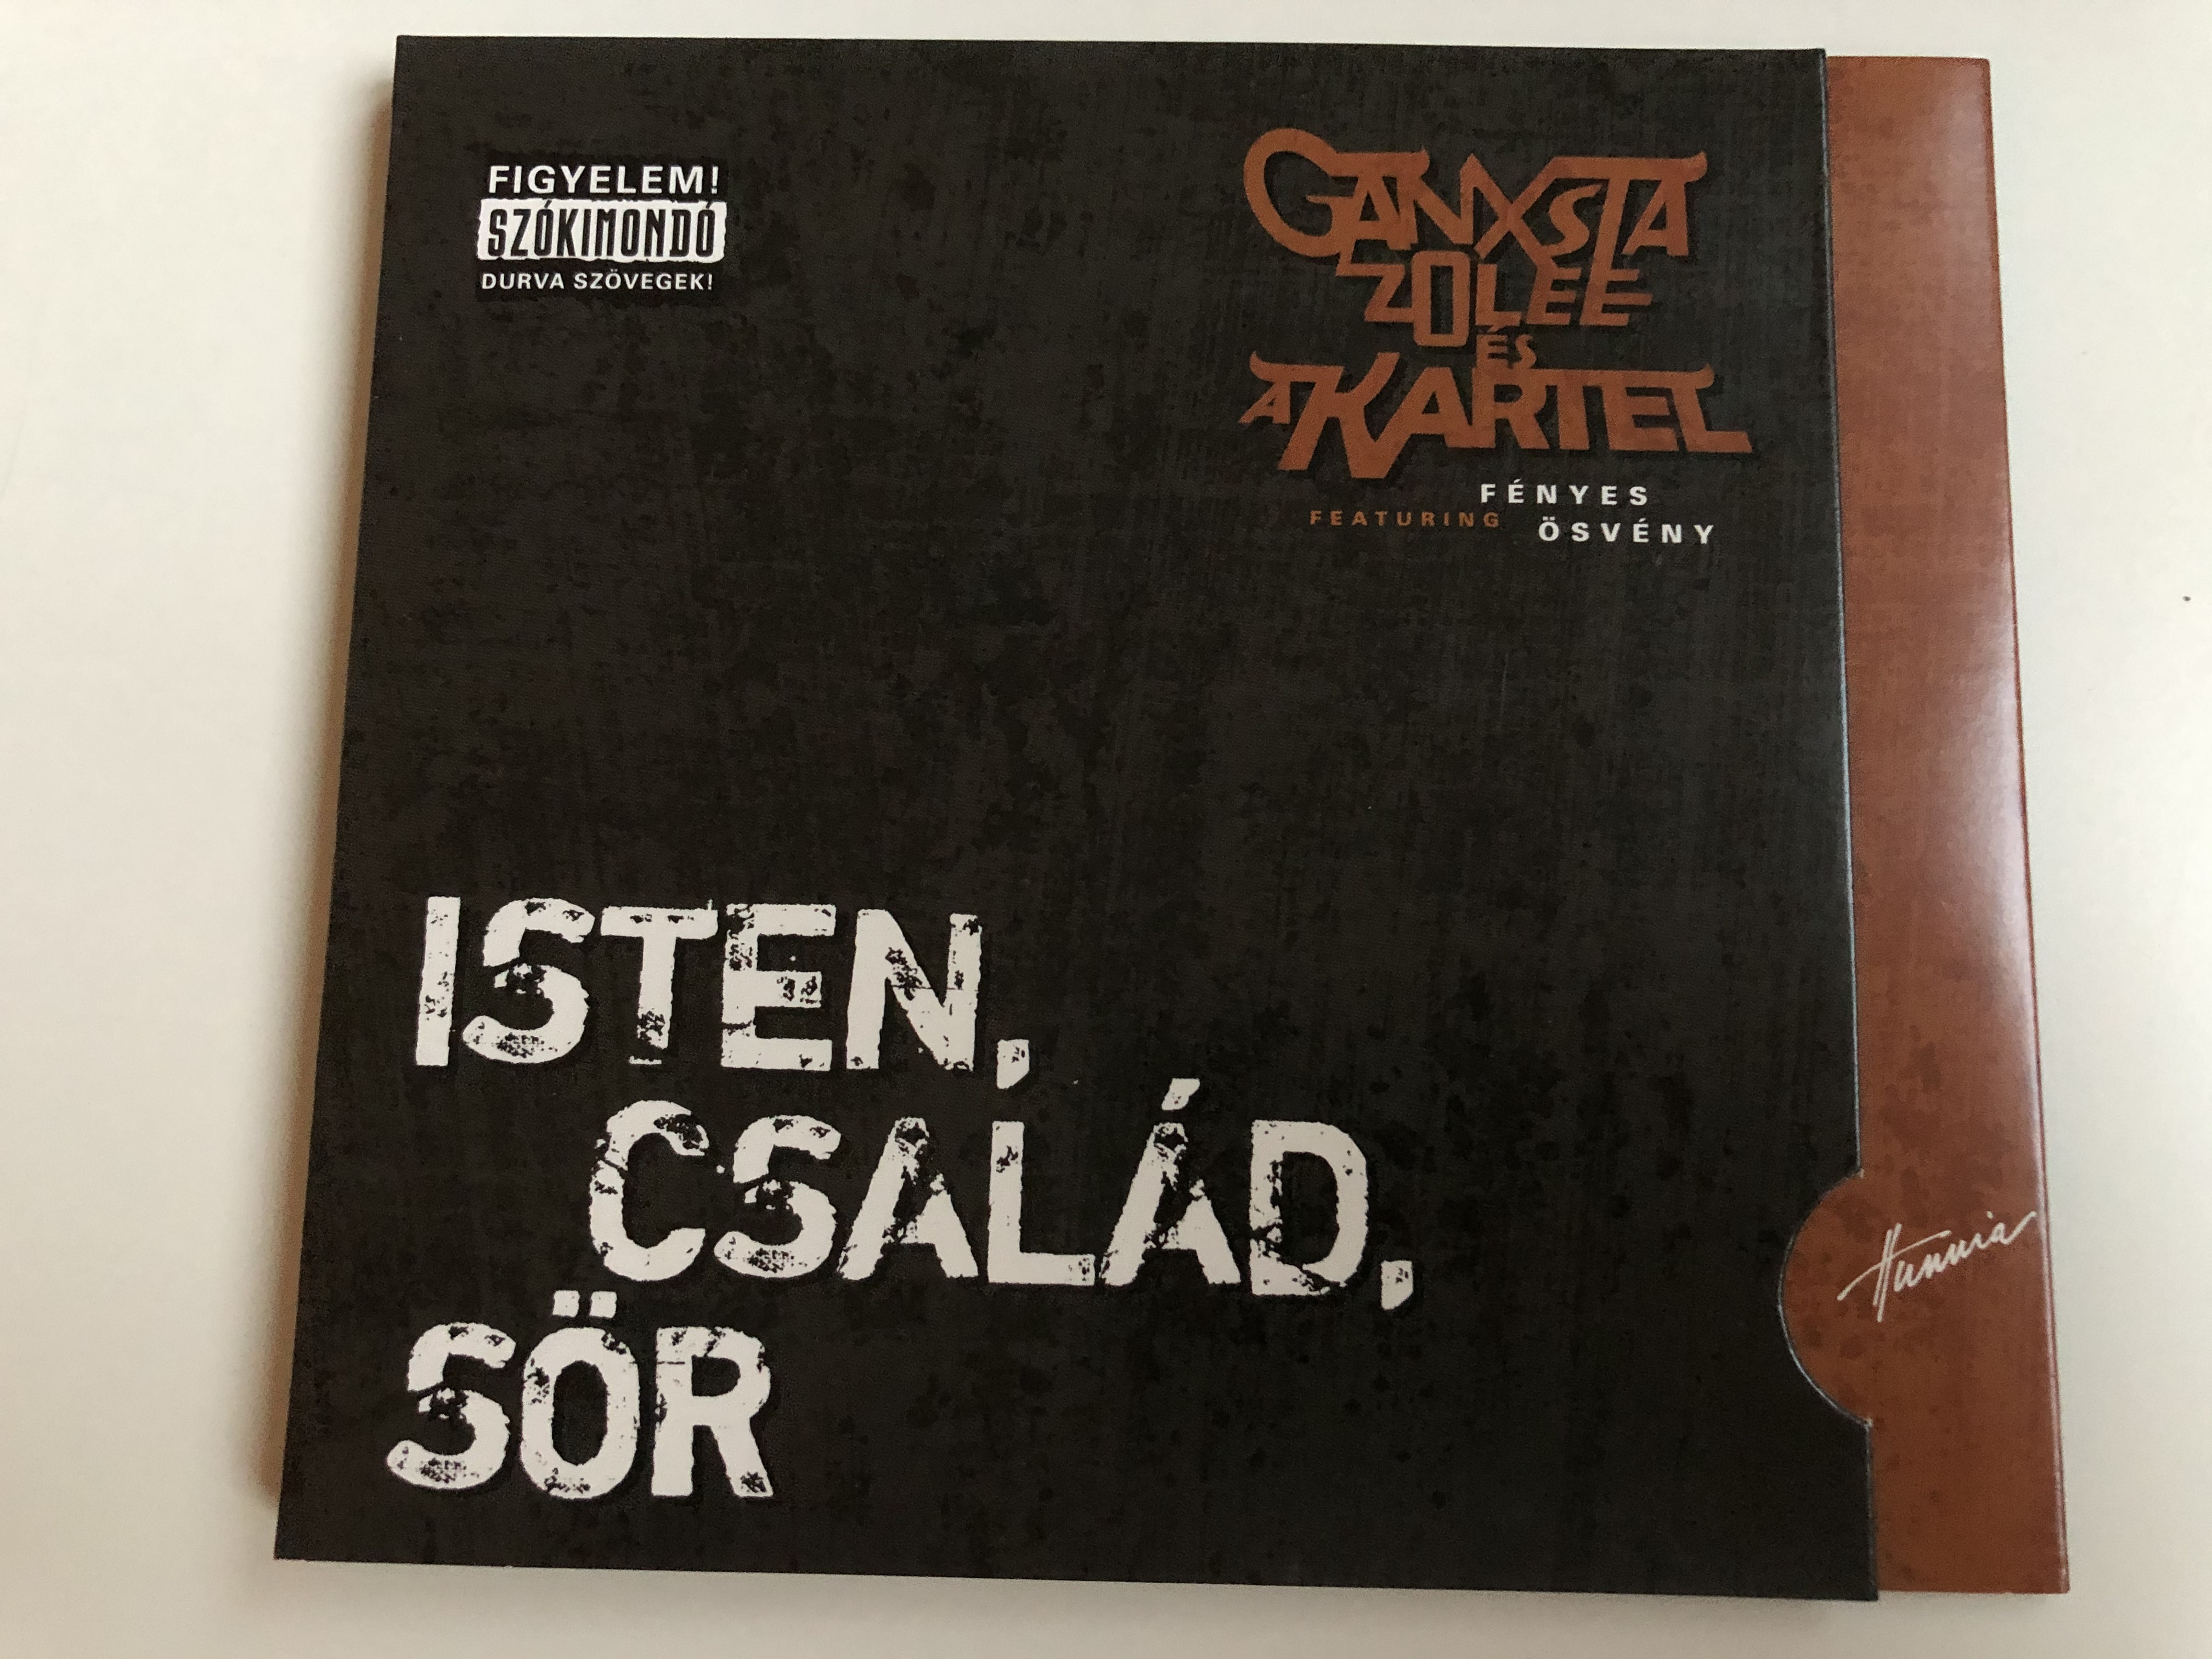 ganxsta-zolee-s-a-kartel-featuring-f-nyes-sv-ny-isten-csal-d-s-r-hunnia-records-audio-cd-2007-hrcd-702-1-.jpg